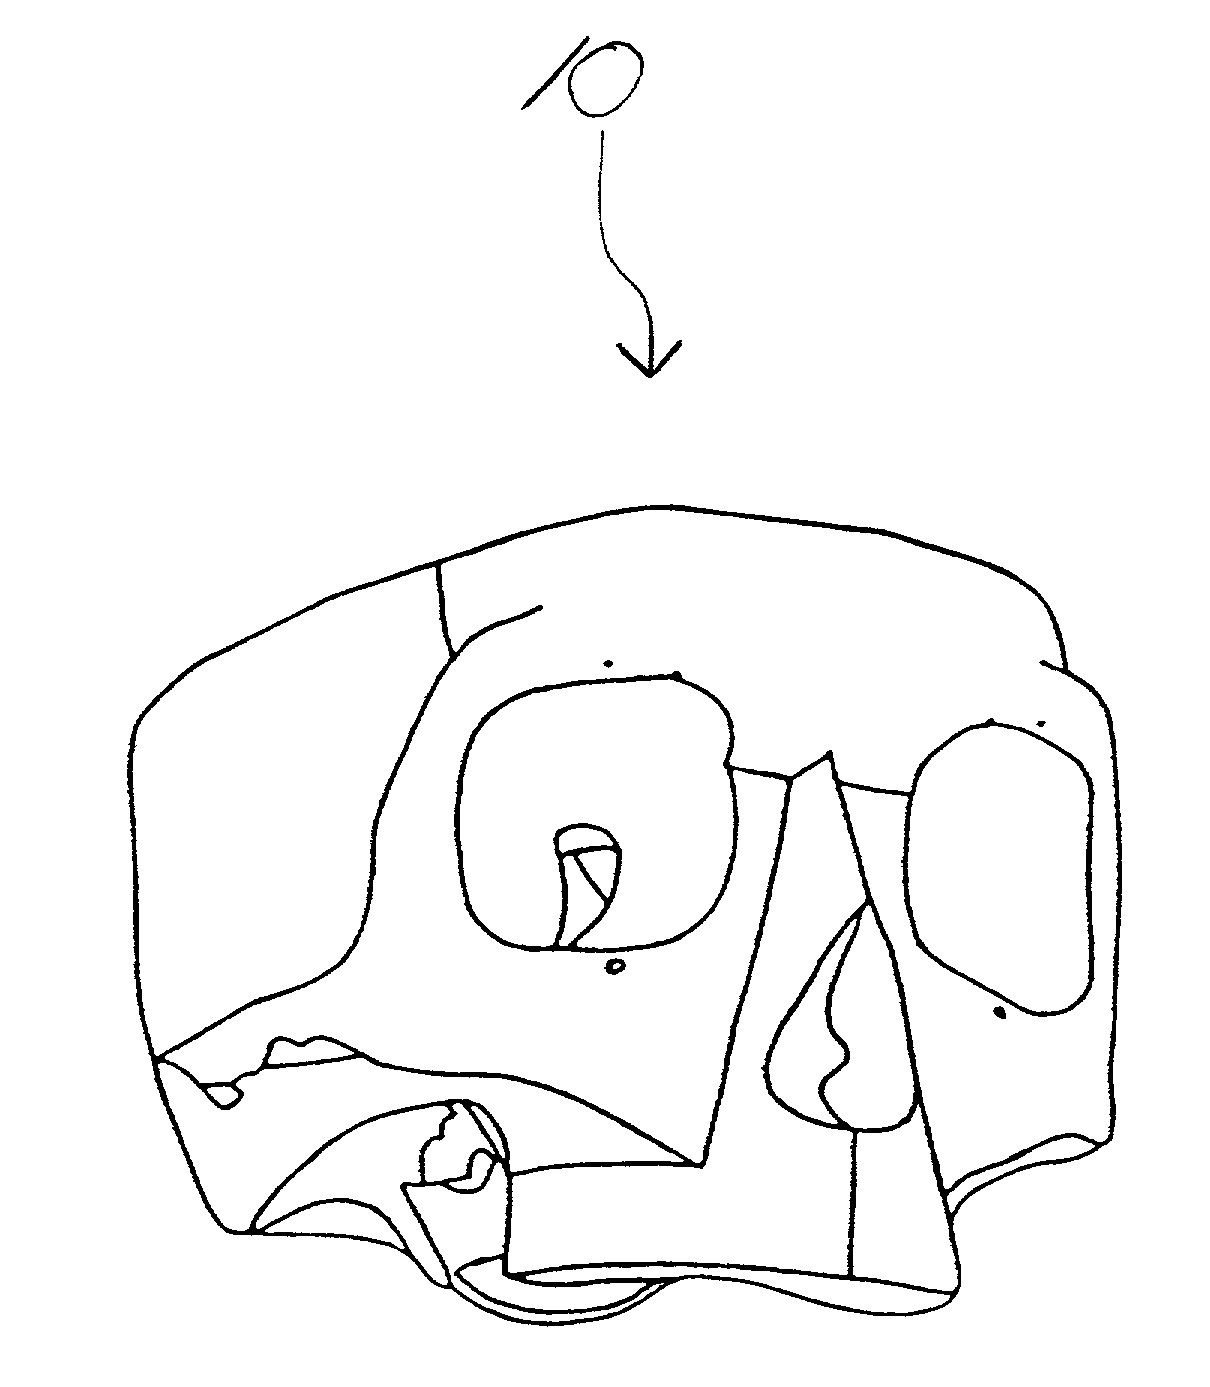 Paper-skull-model system